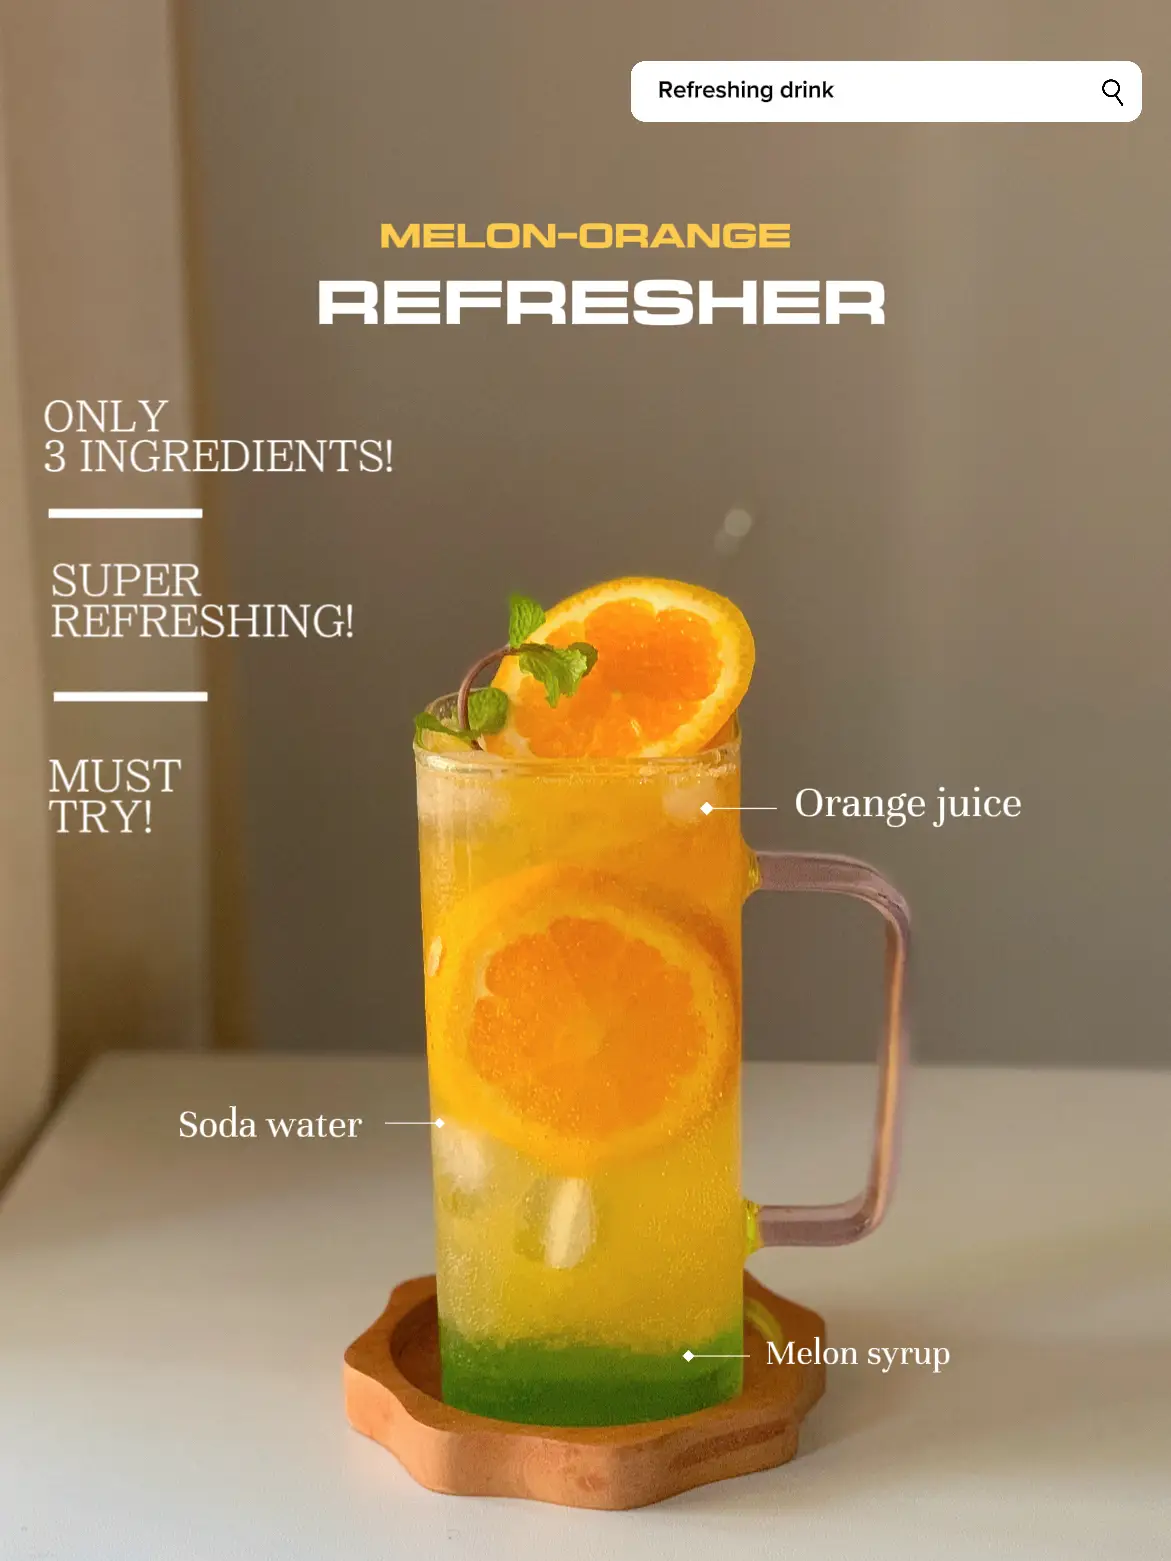 SUPER REFRESHING DRINK! ONLY 3 INGREDIENTS! Artikel disiarkan oleh juli ss Lemon8 pic